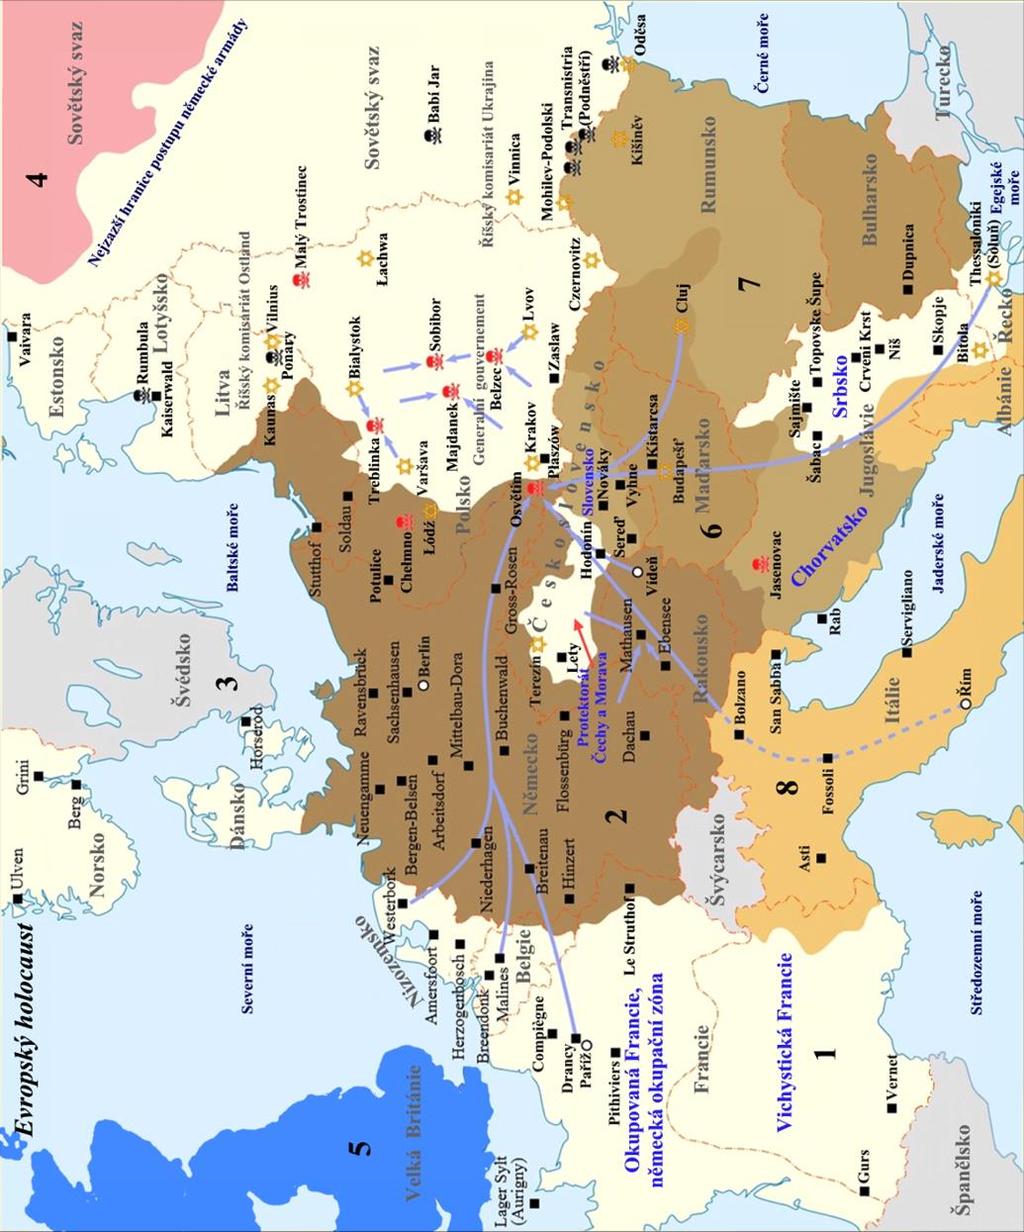 Mapa Evropský holocaust 3 upravená mapa 4 3 AUTOR NEUVEDEN. File:WW2 Holocaust Europe map-fr.svg [online]. [cit. 25.1.2014].